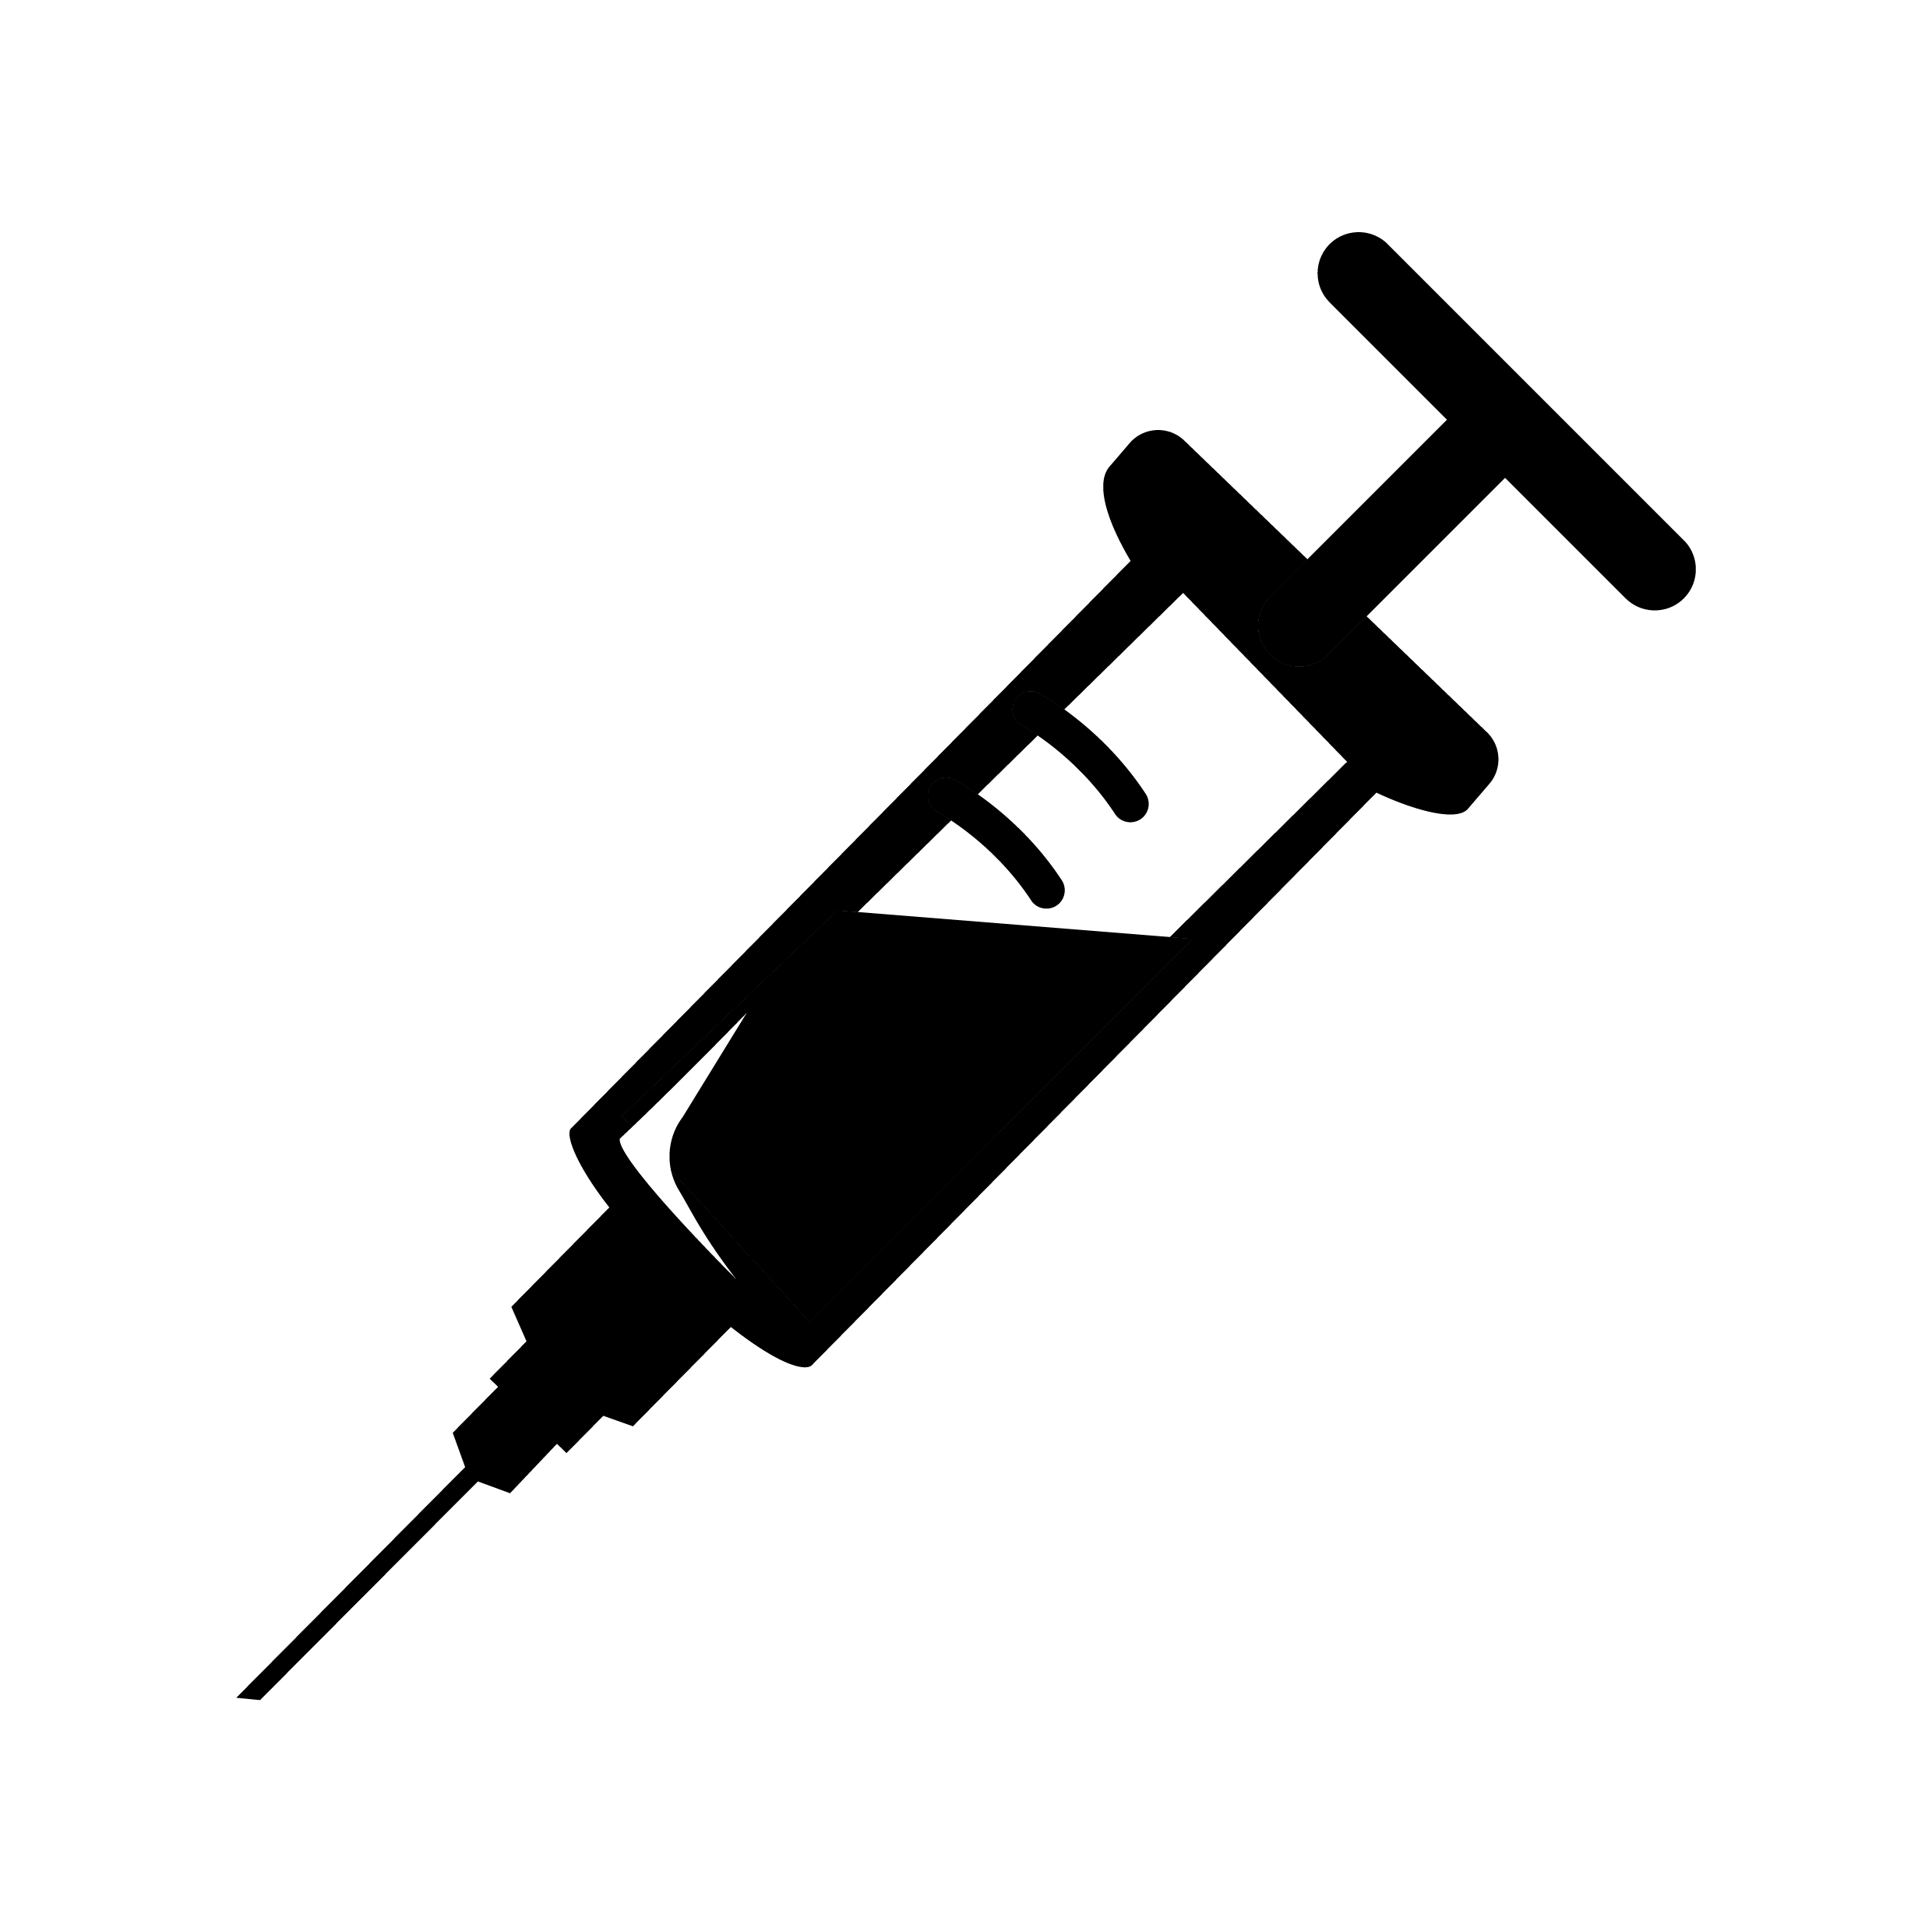 Syringe vector graphics.